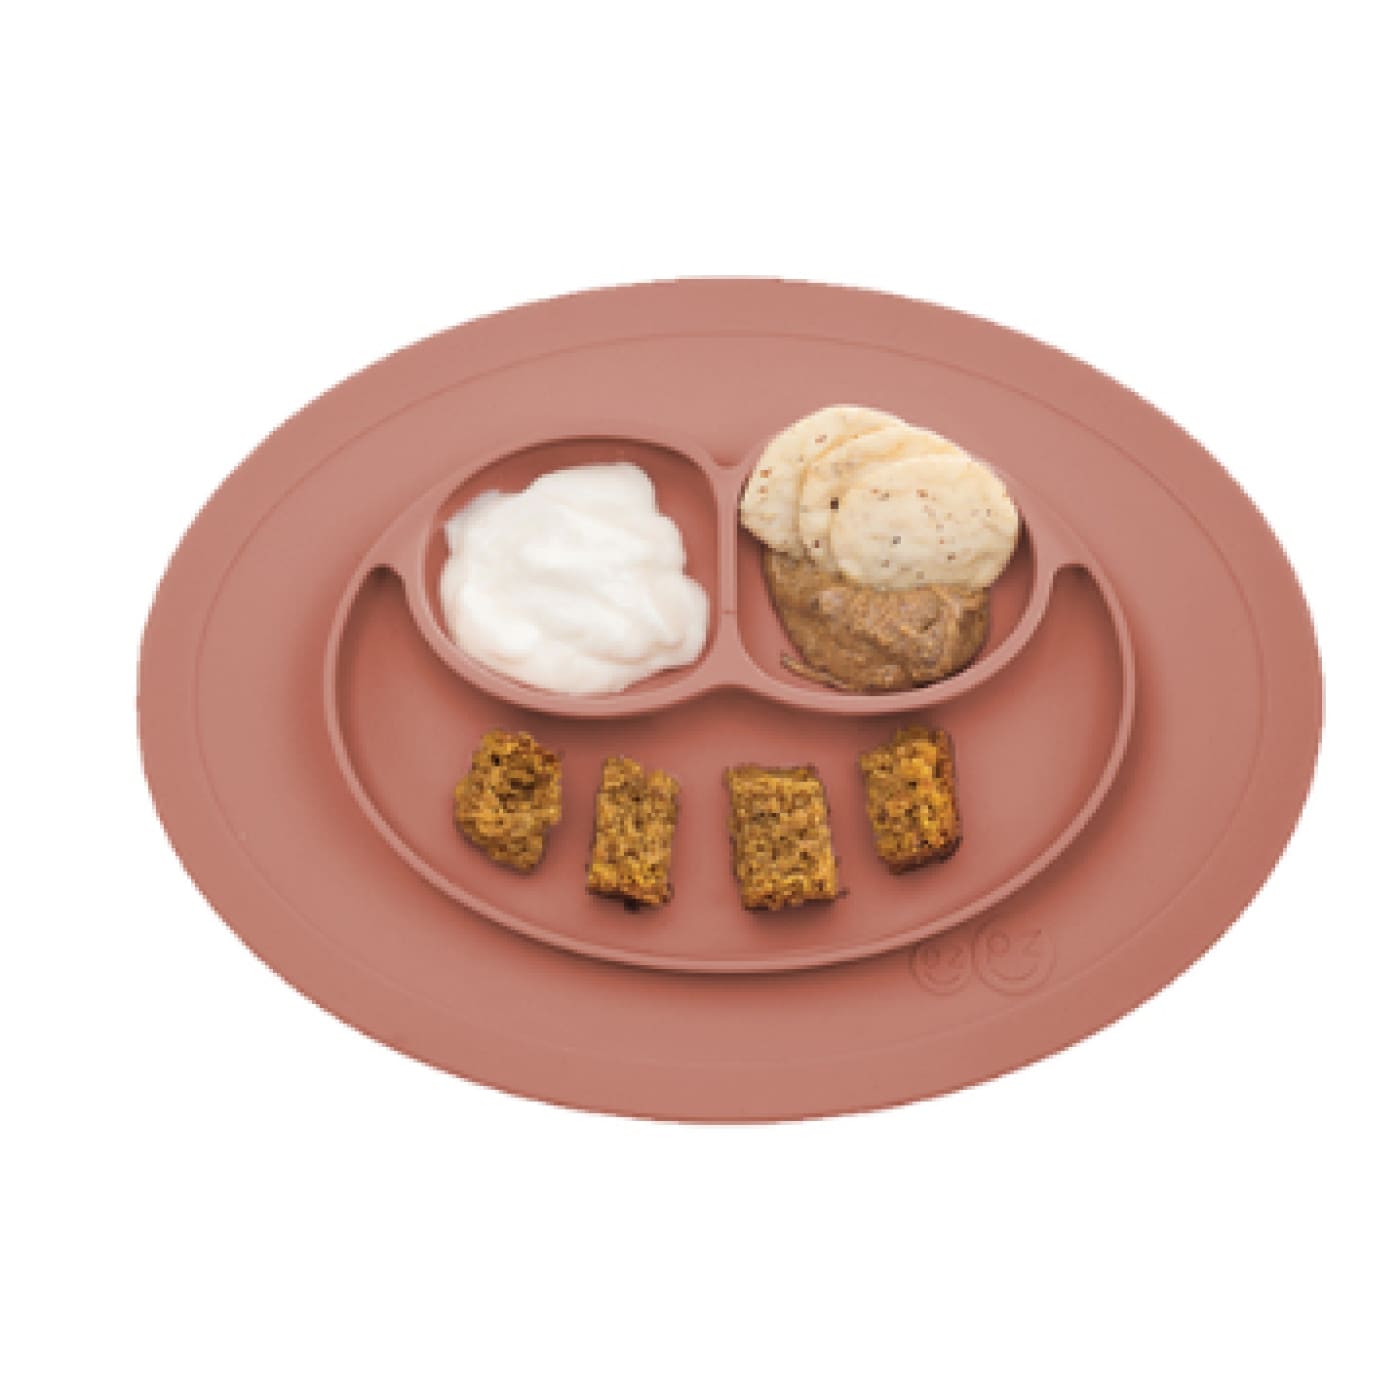 EZPZ Mini Mat - Sienna - Sienna - NURSING & FEEDING - CUTLERY/PLATES/BOWLS/TOYS